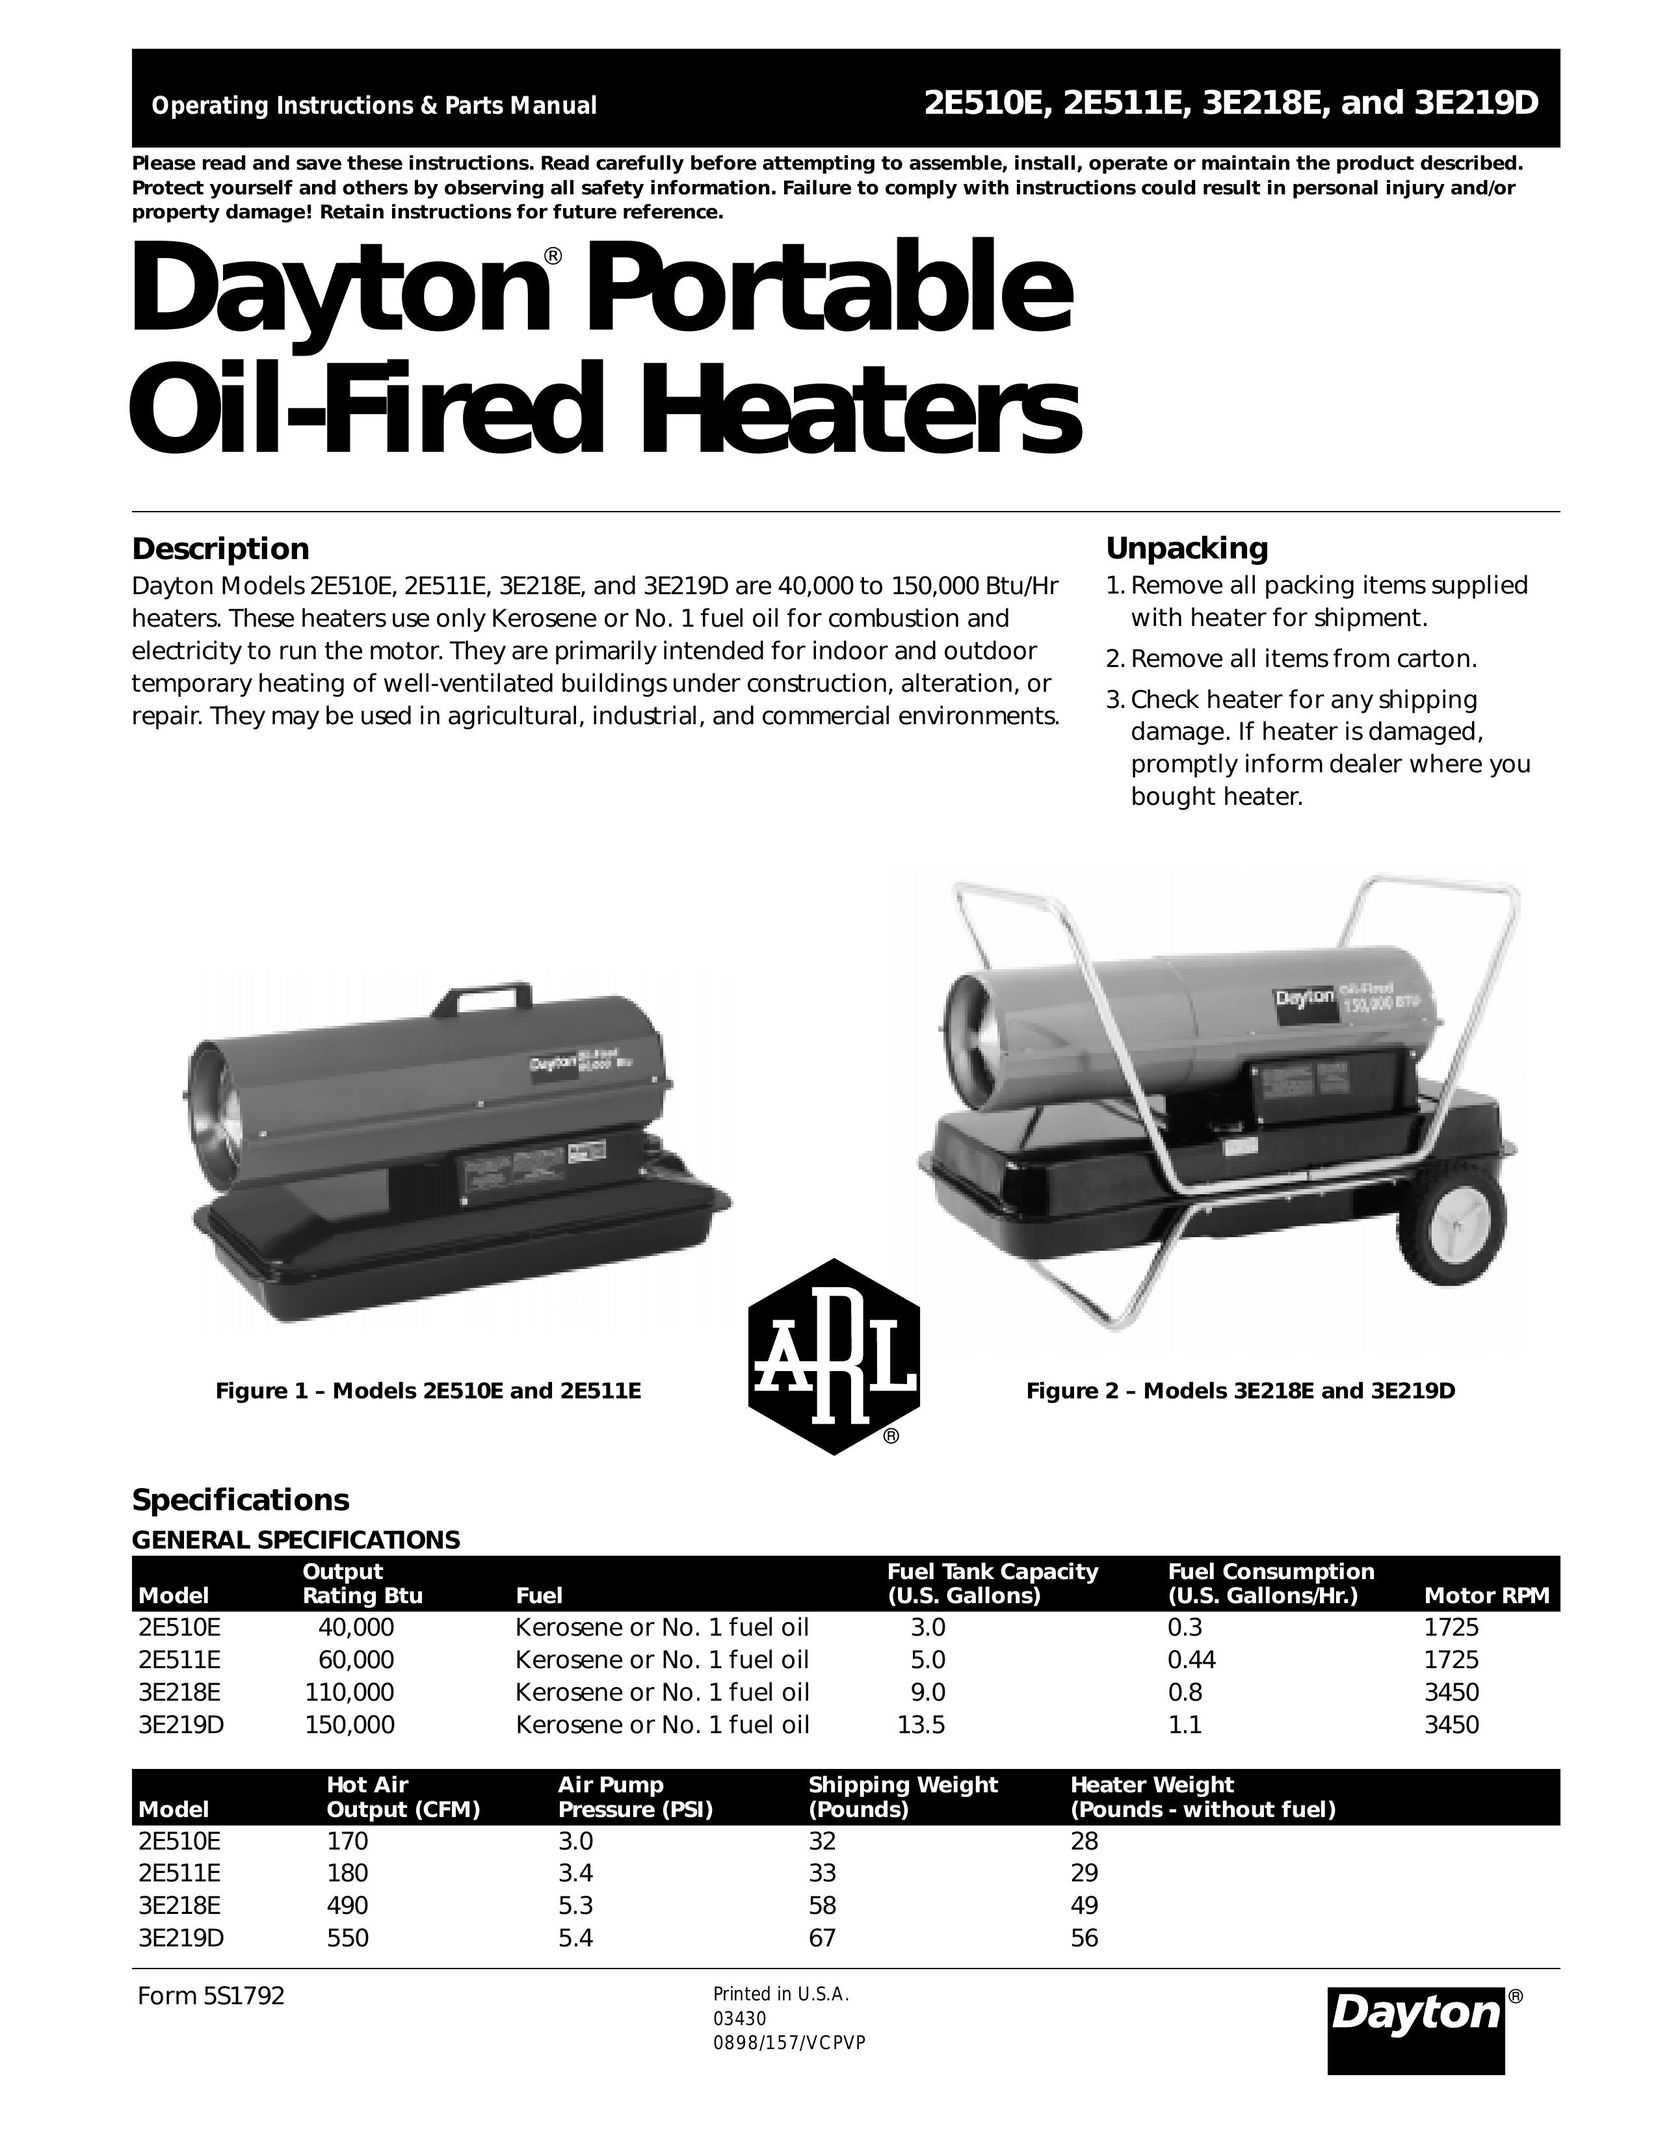 Dayton 3E219D Electric Heater User Manual